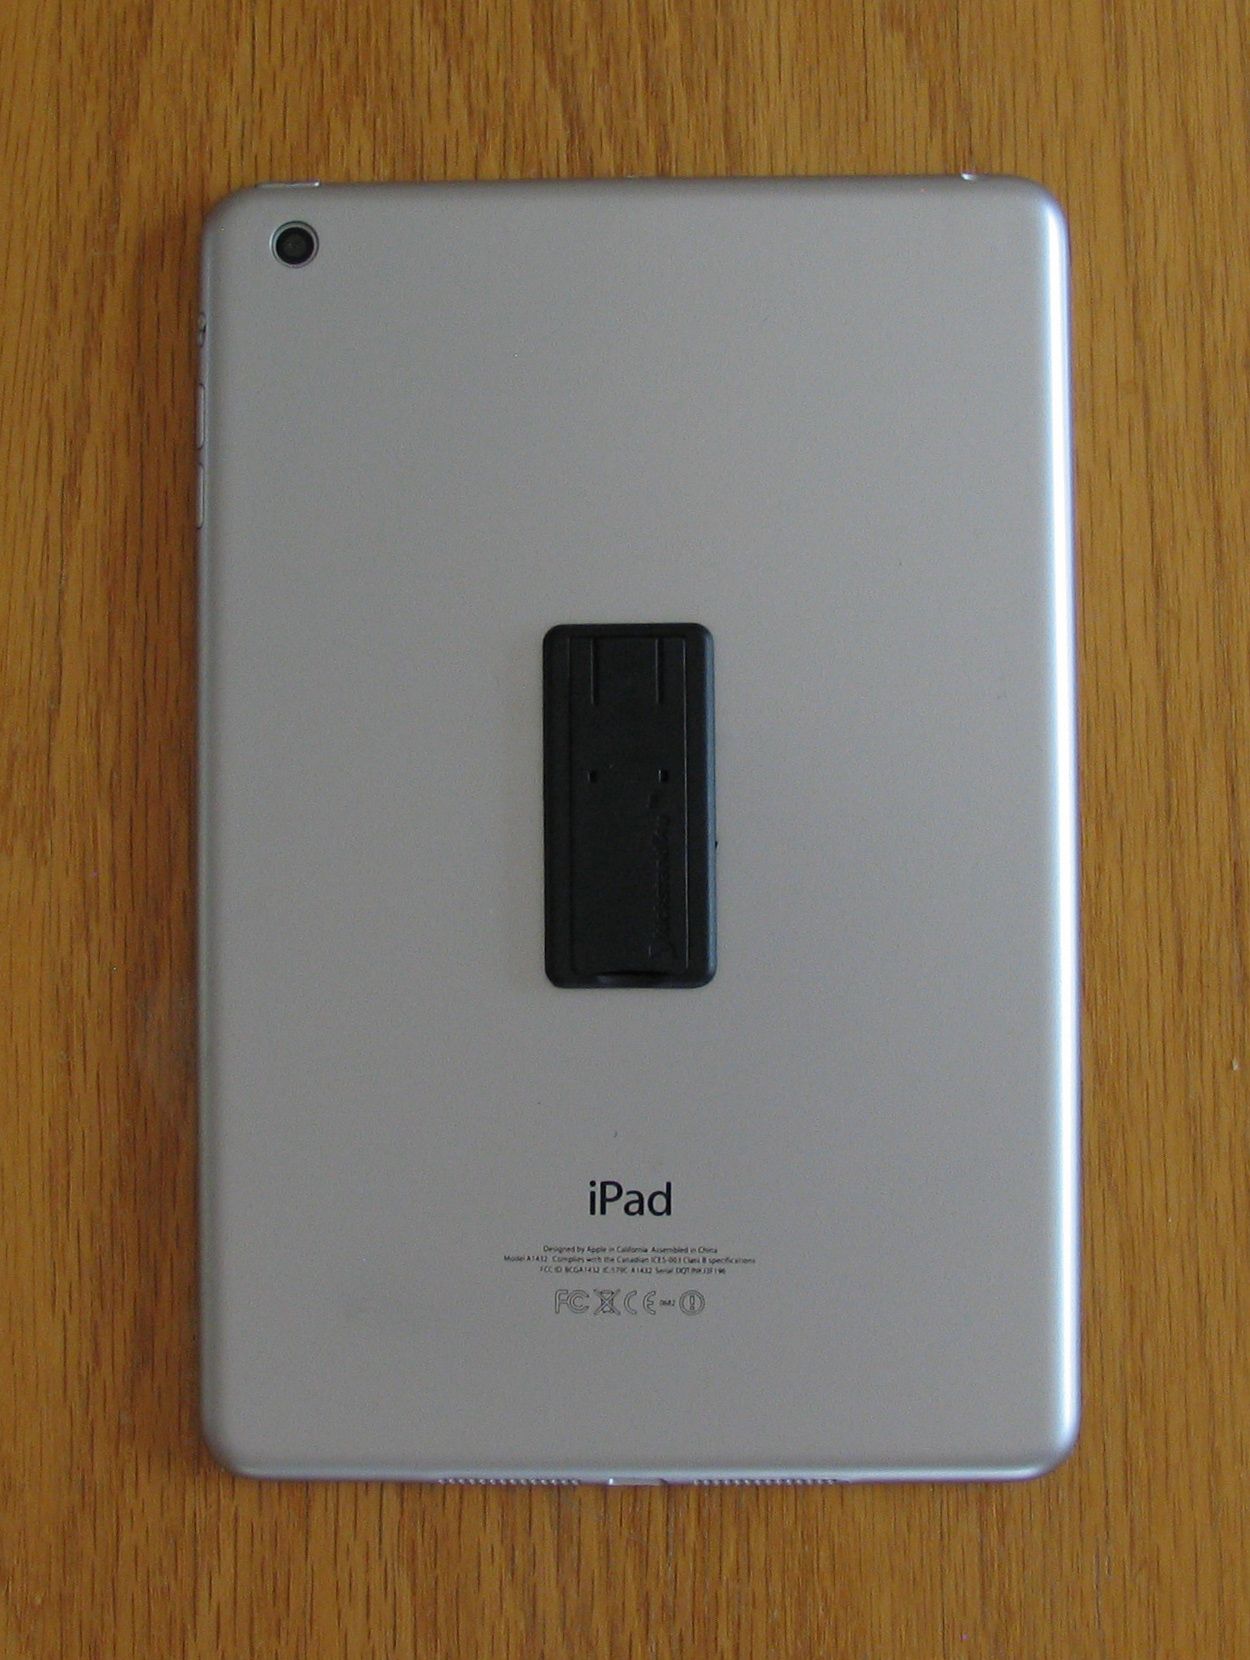 Apple iPad Mini vertical install location